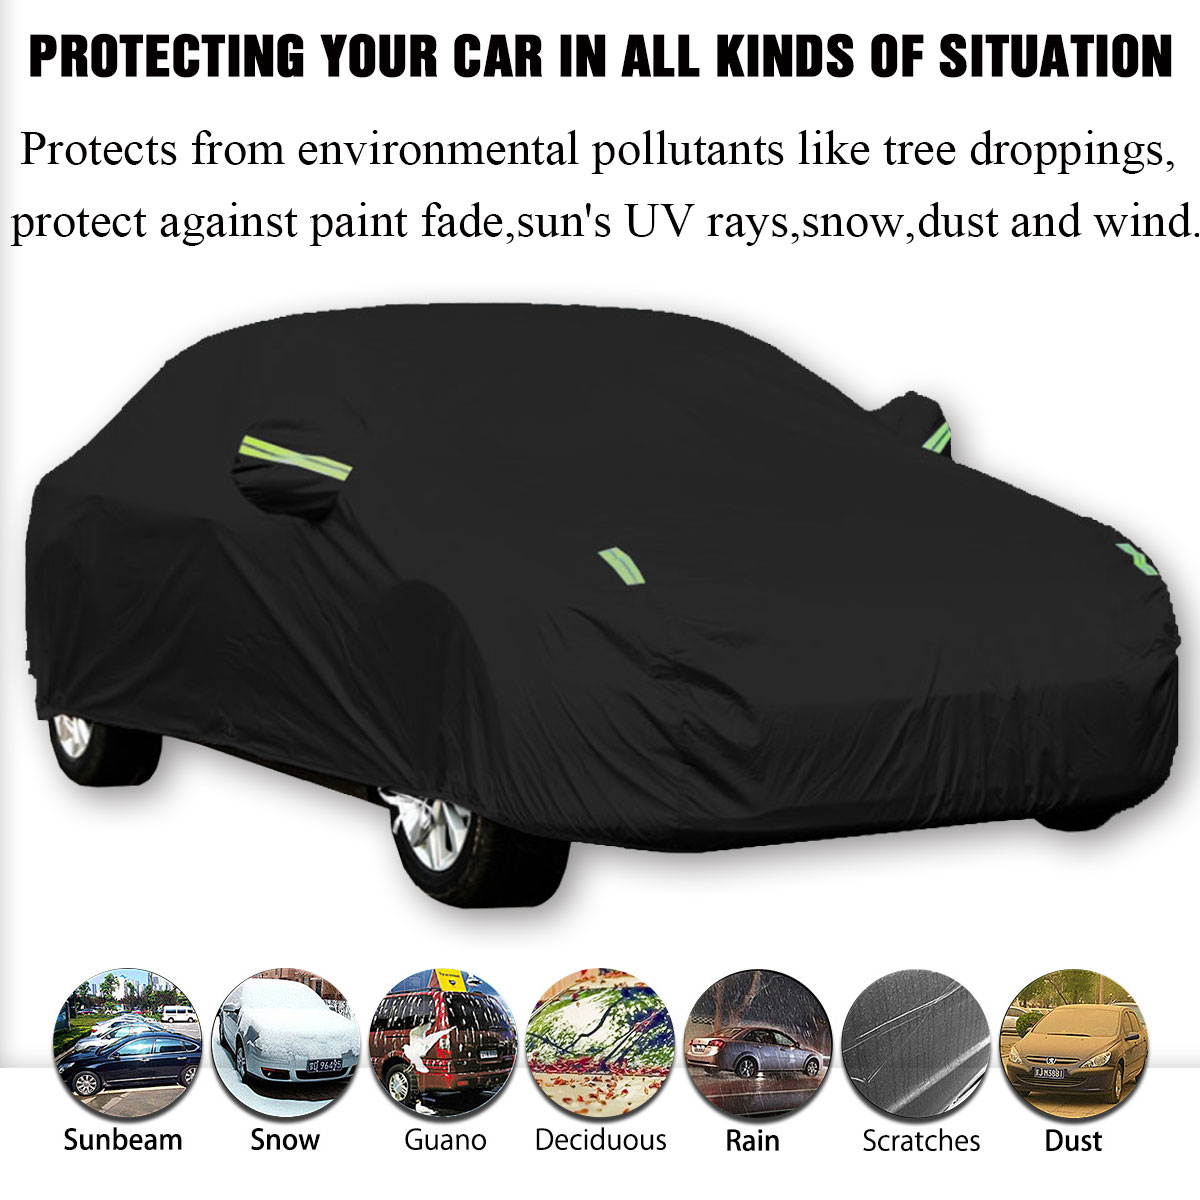 Black Full Car Cover Waterproof Sun Rain Heat Dust UV Resistant Protection 190T